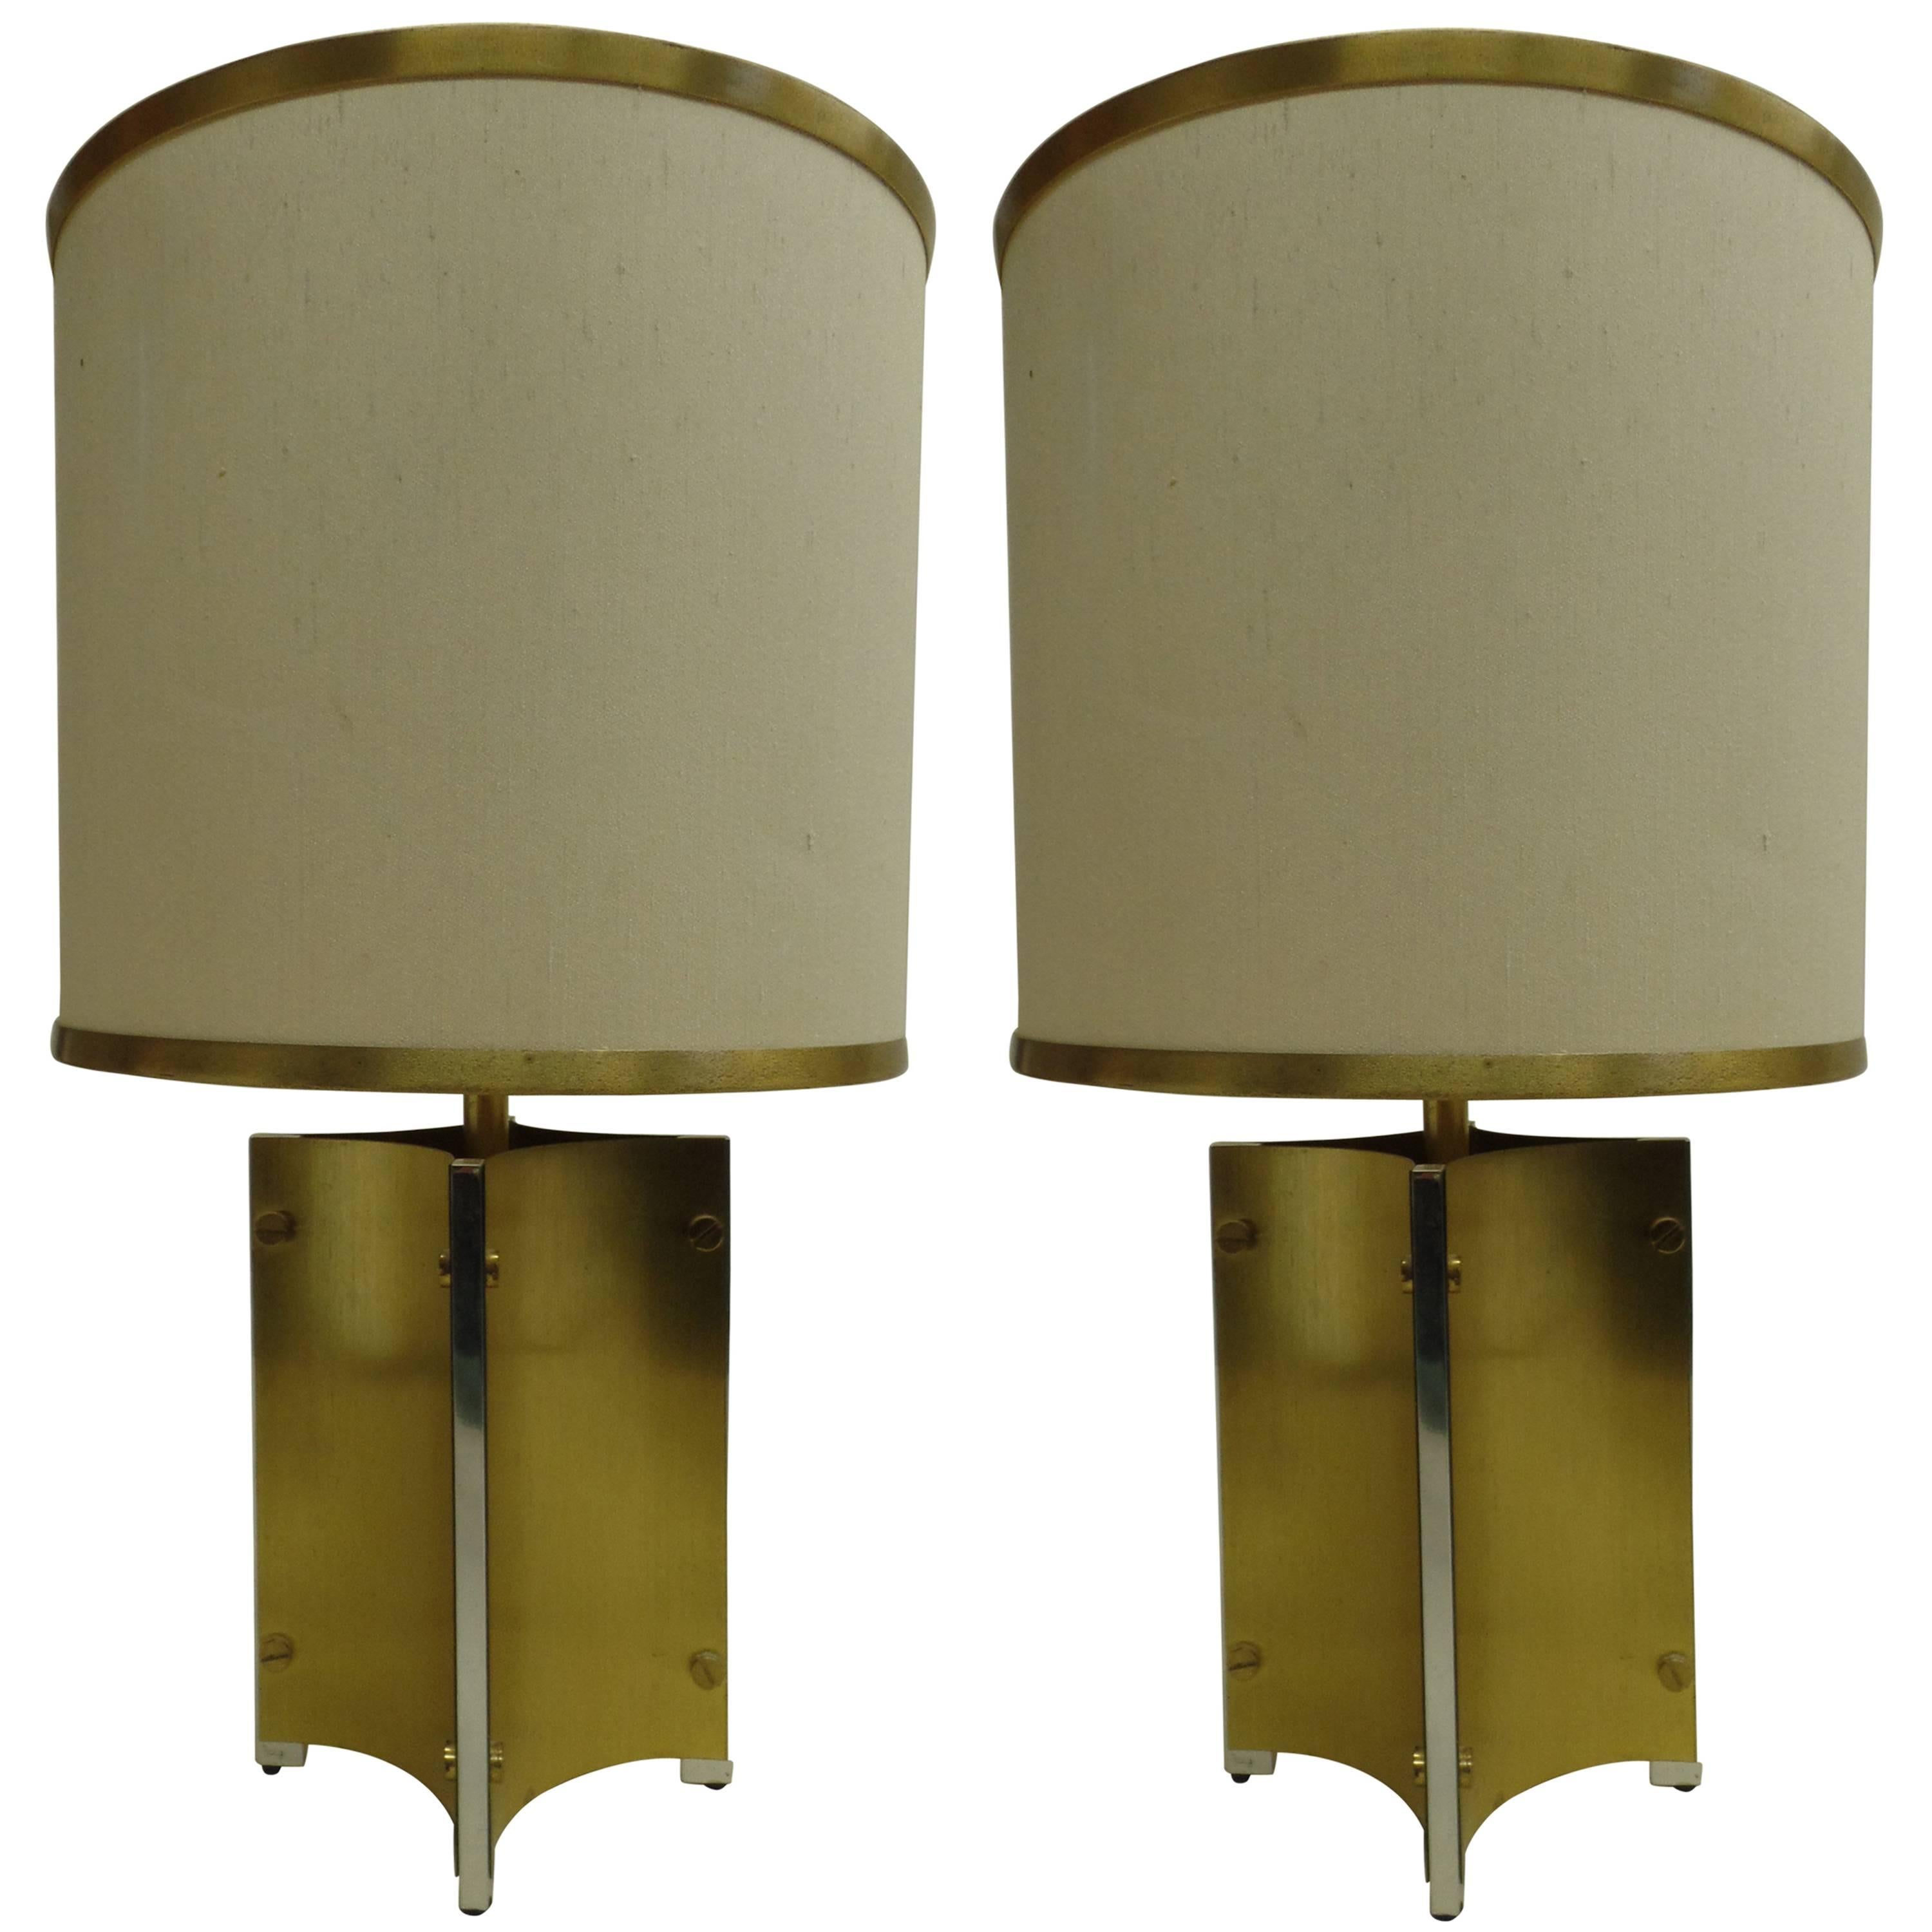 Pair of Italian Midcentury Modern Brass & Steel Table Lamps Attr. to Romeo Rega For Sale